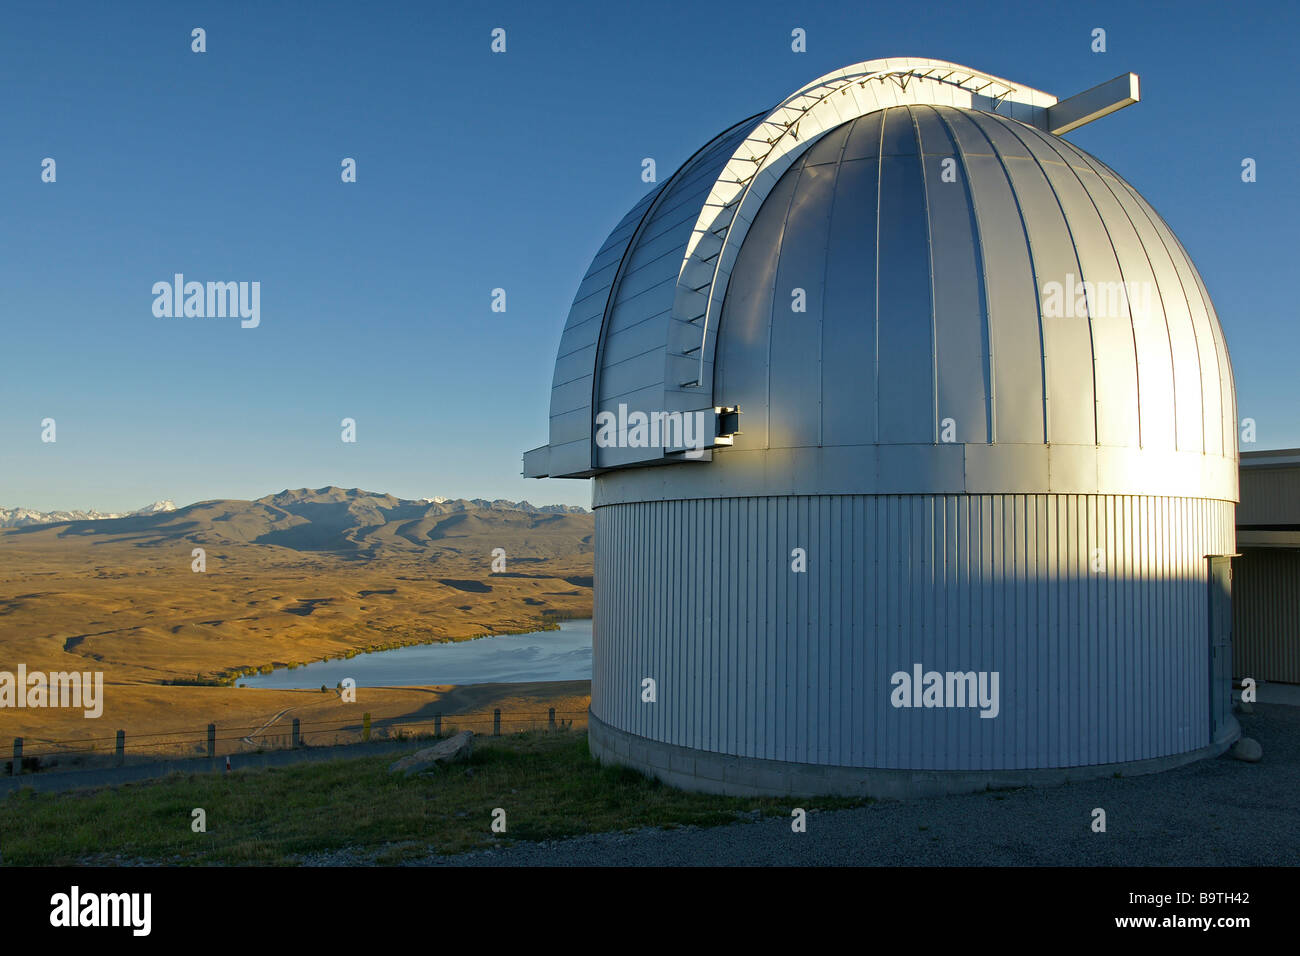 New Zealand's largest telescope at sunrise which is located at Mt John Observatory, Lake Tekapo. Stock Photo